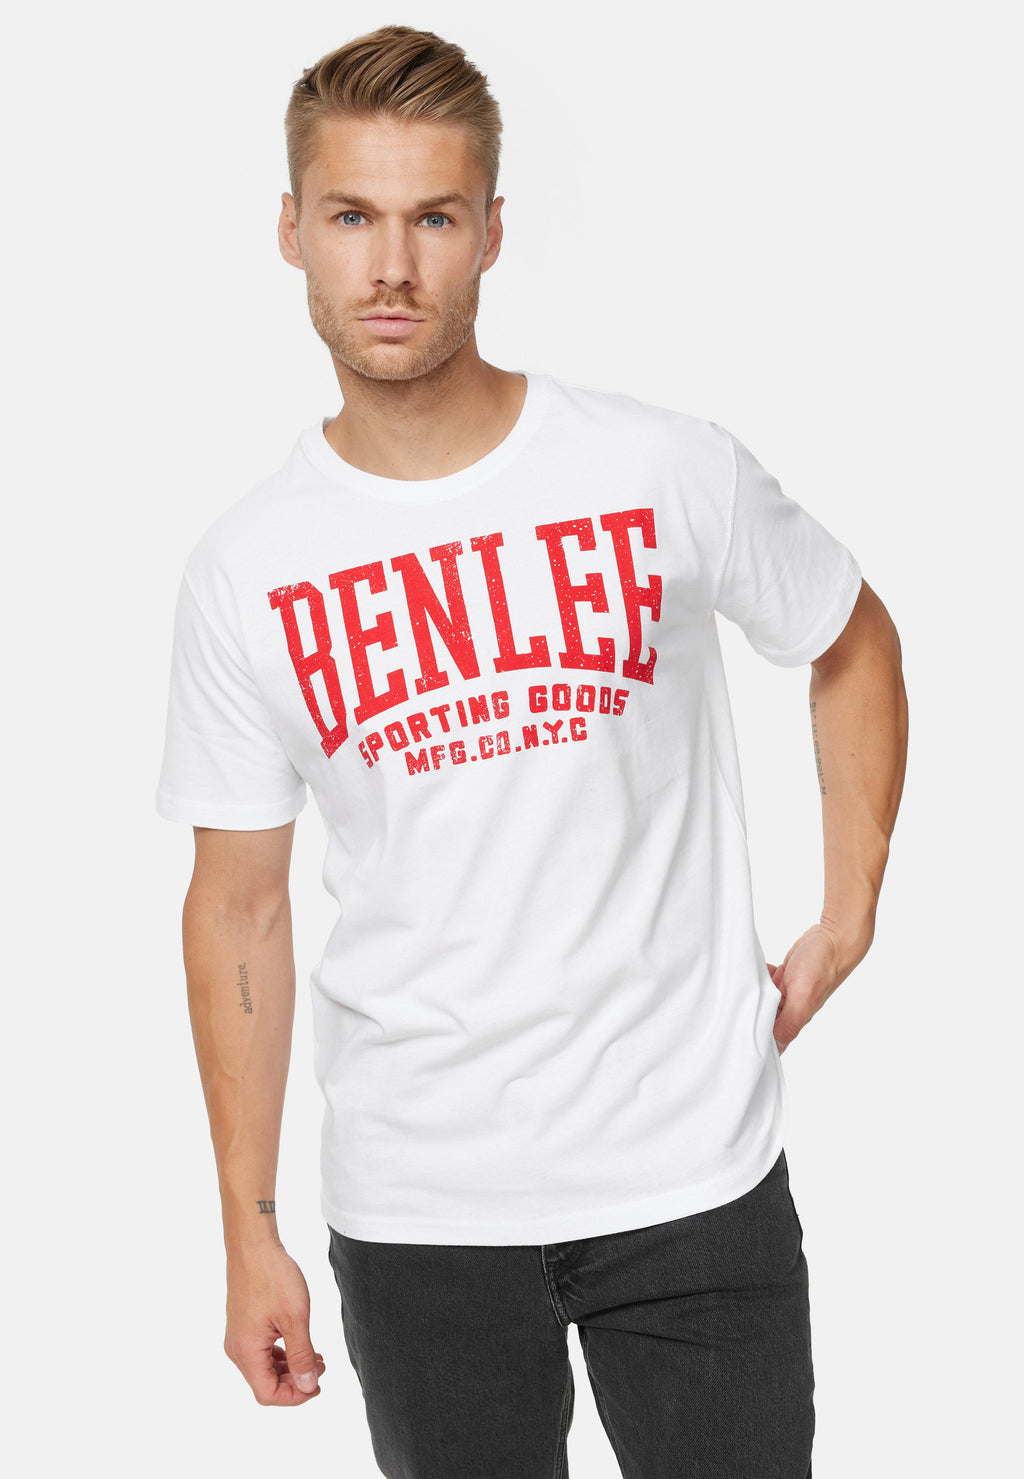 Benlee TURNEY T-Shirt White